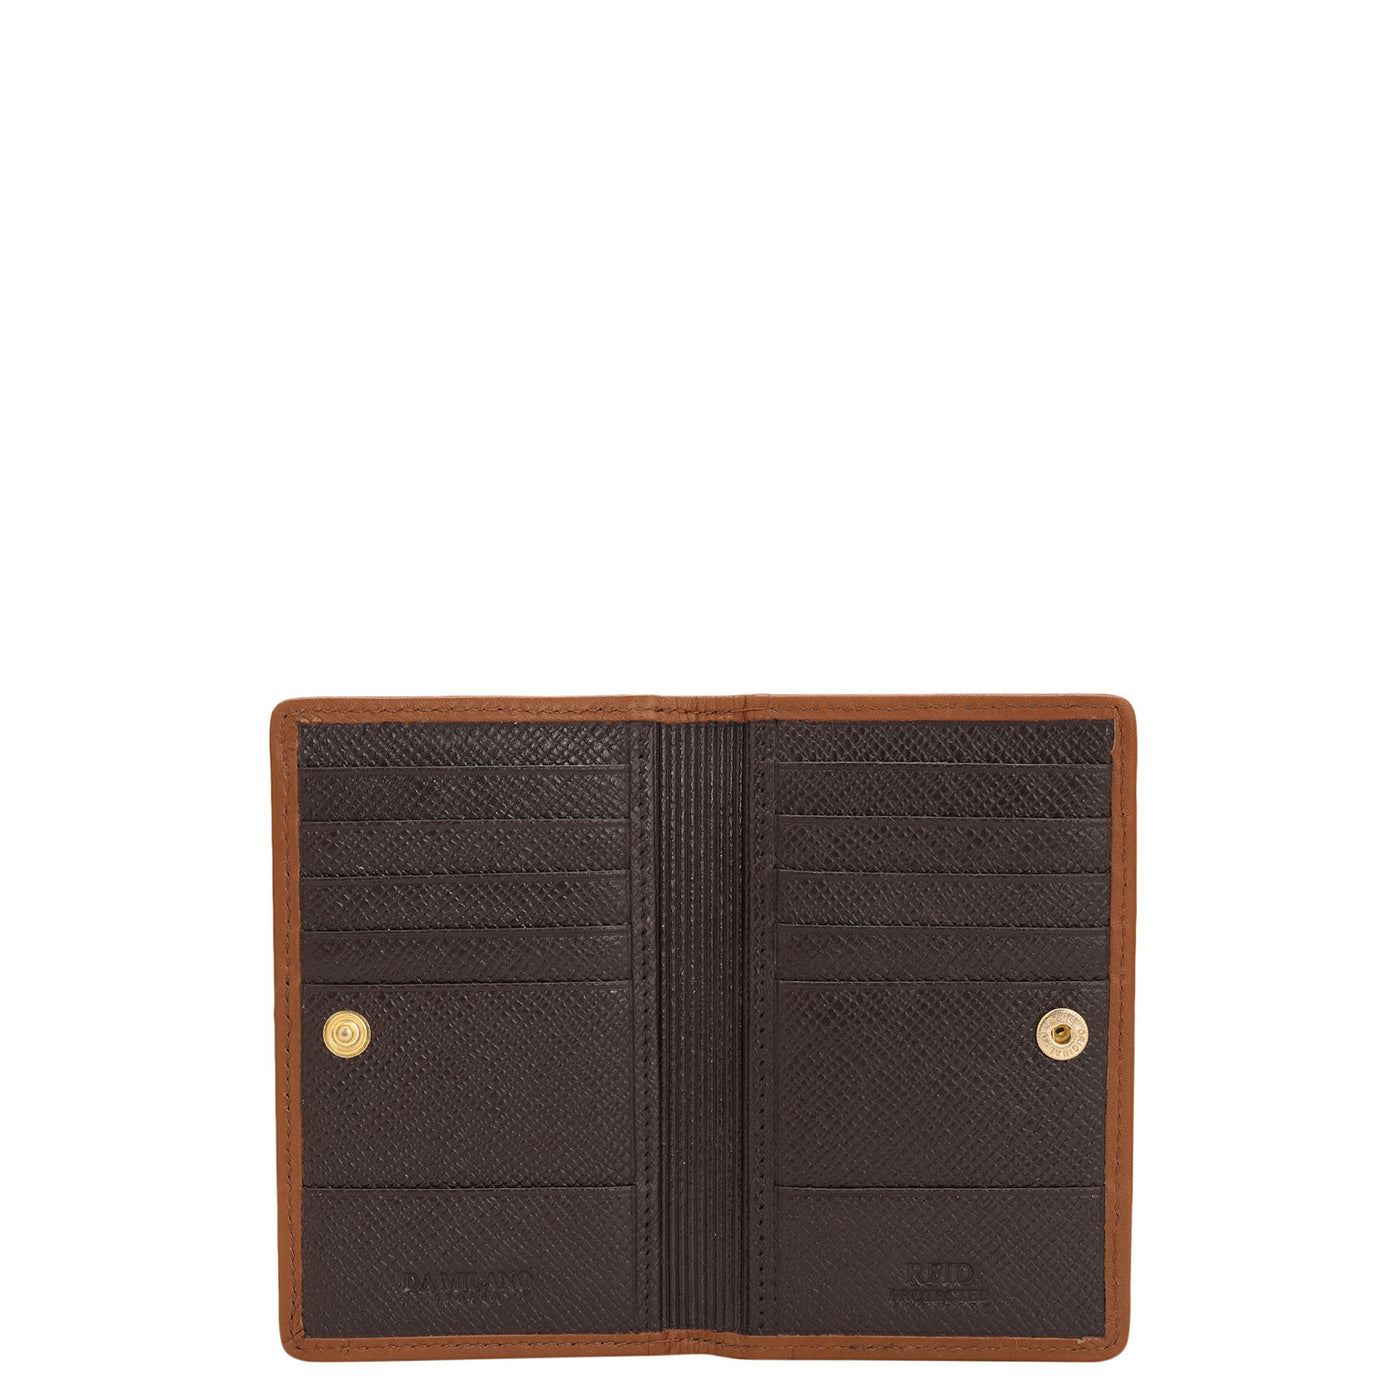 Monogram Leather Card Case - Chocolate